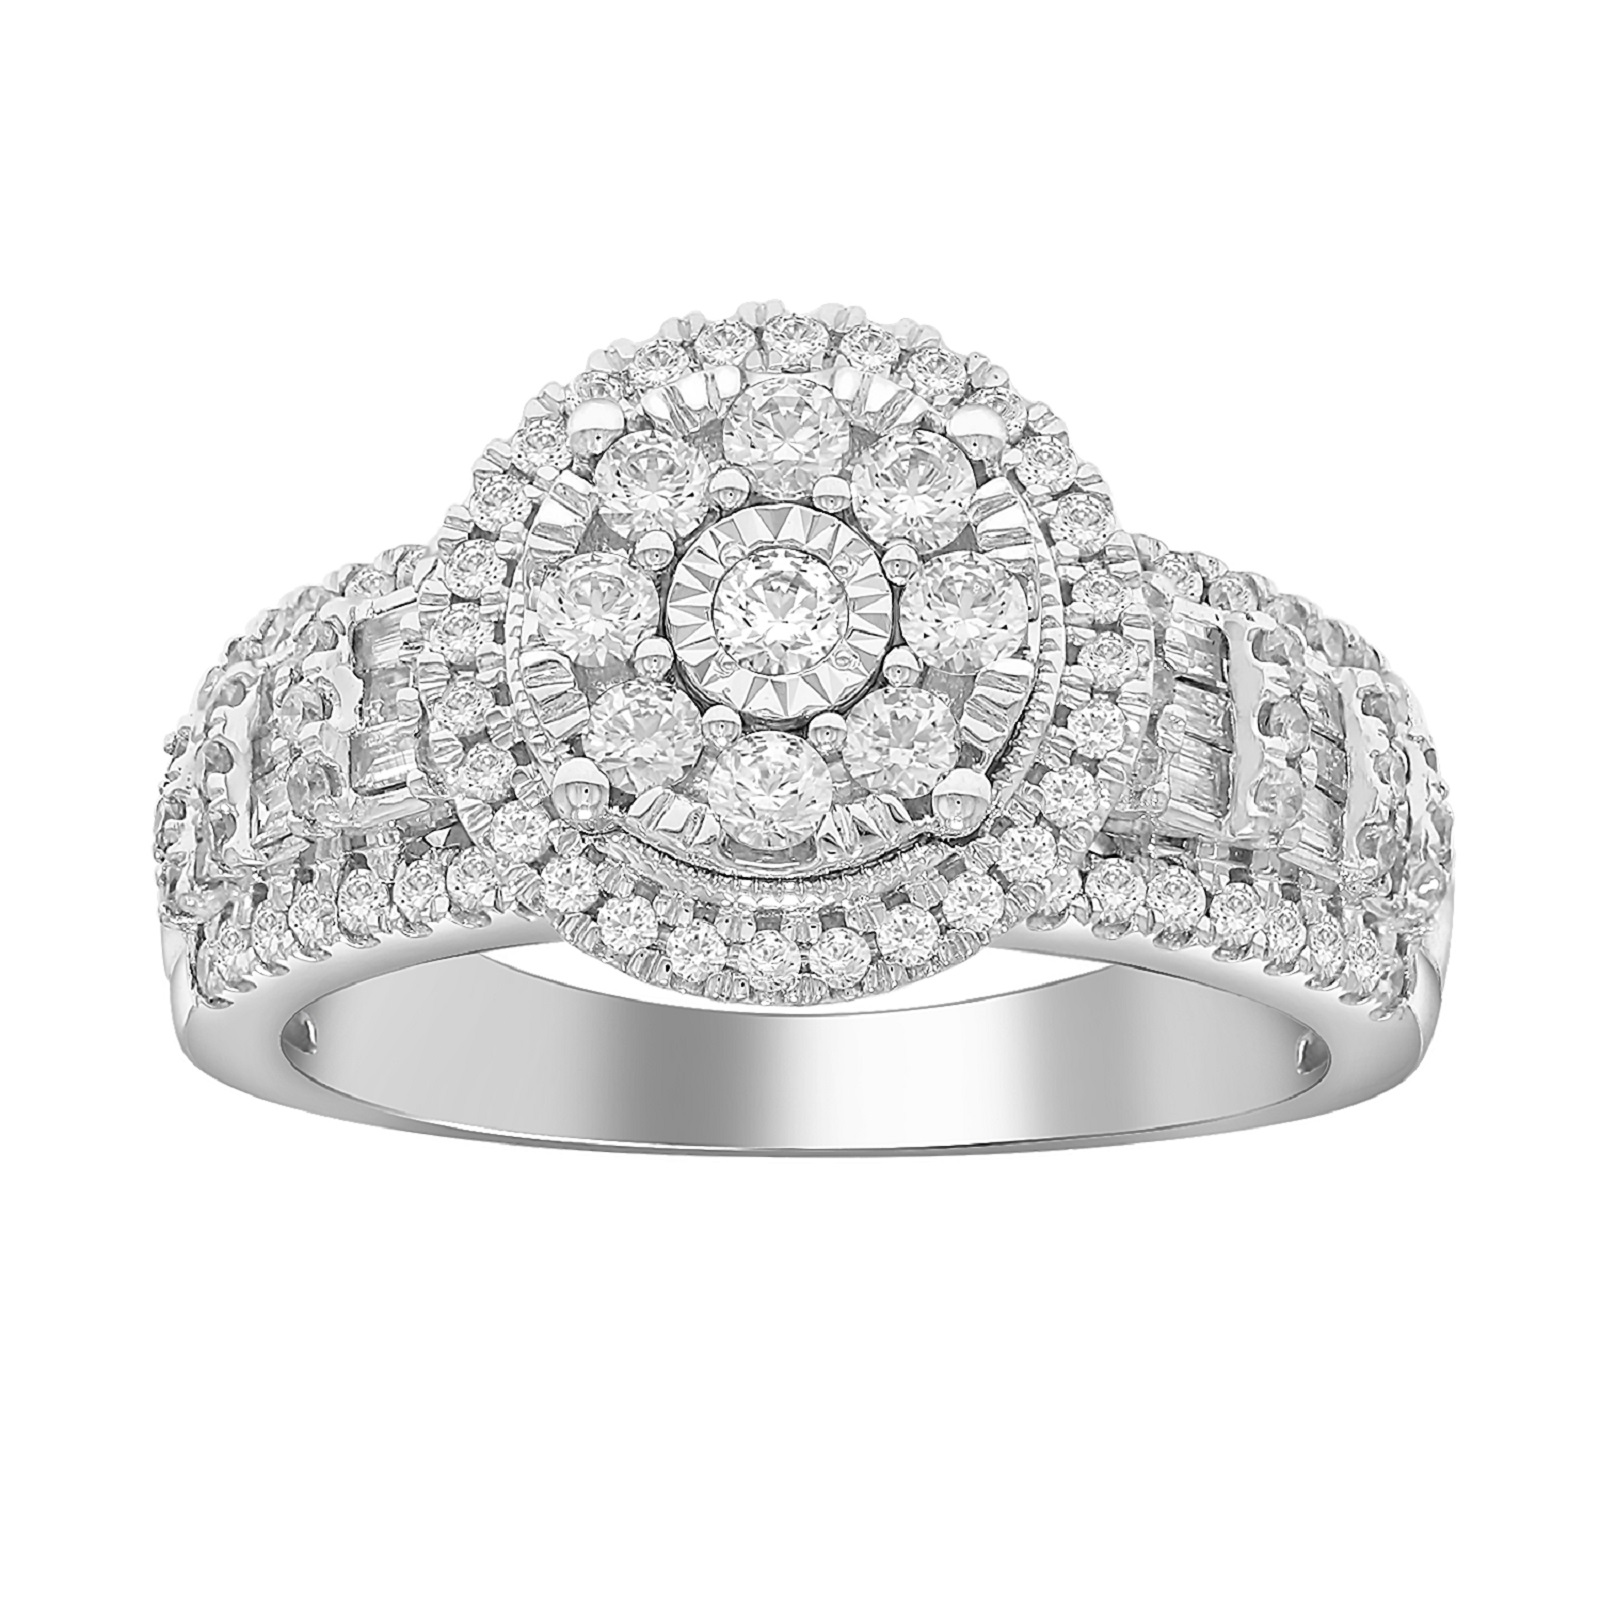 10K White Gold 1CT.TW. Cluster Diamond Engagement Ring